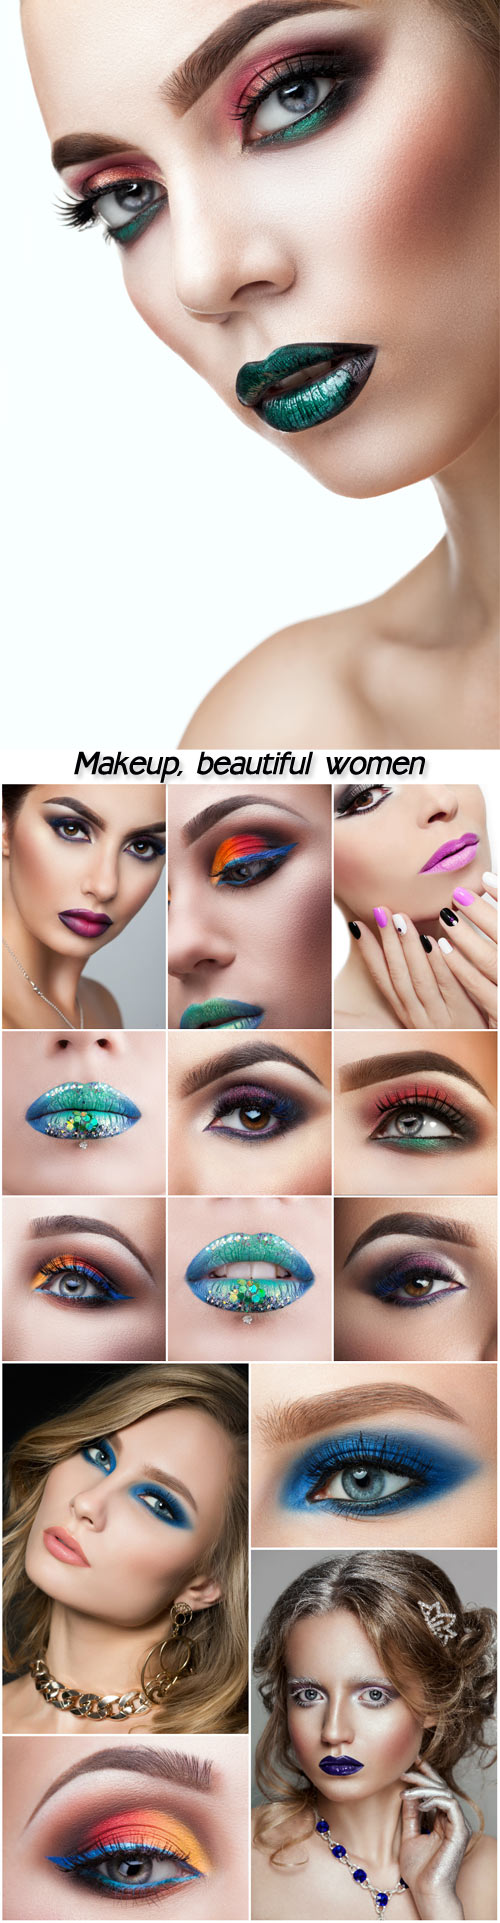 Makeup, beautiful and fashionable women